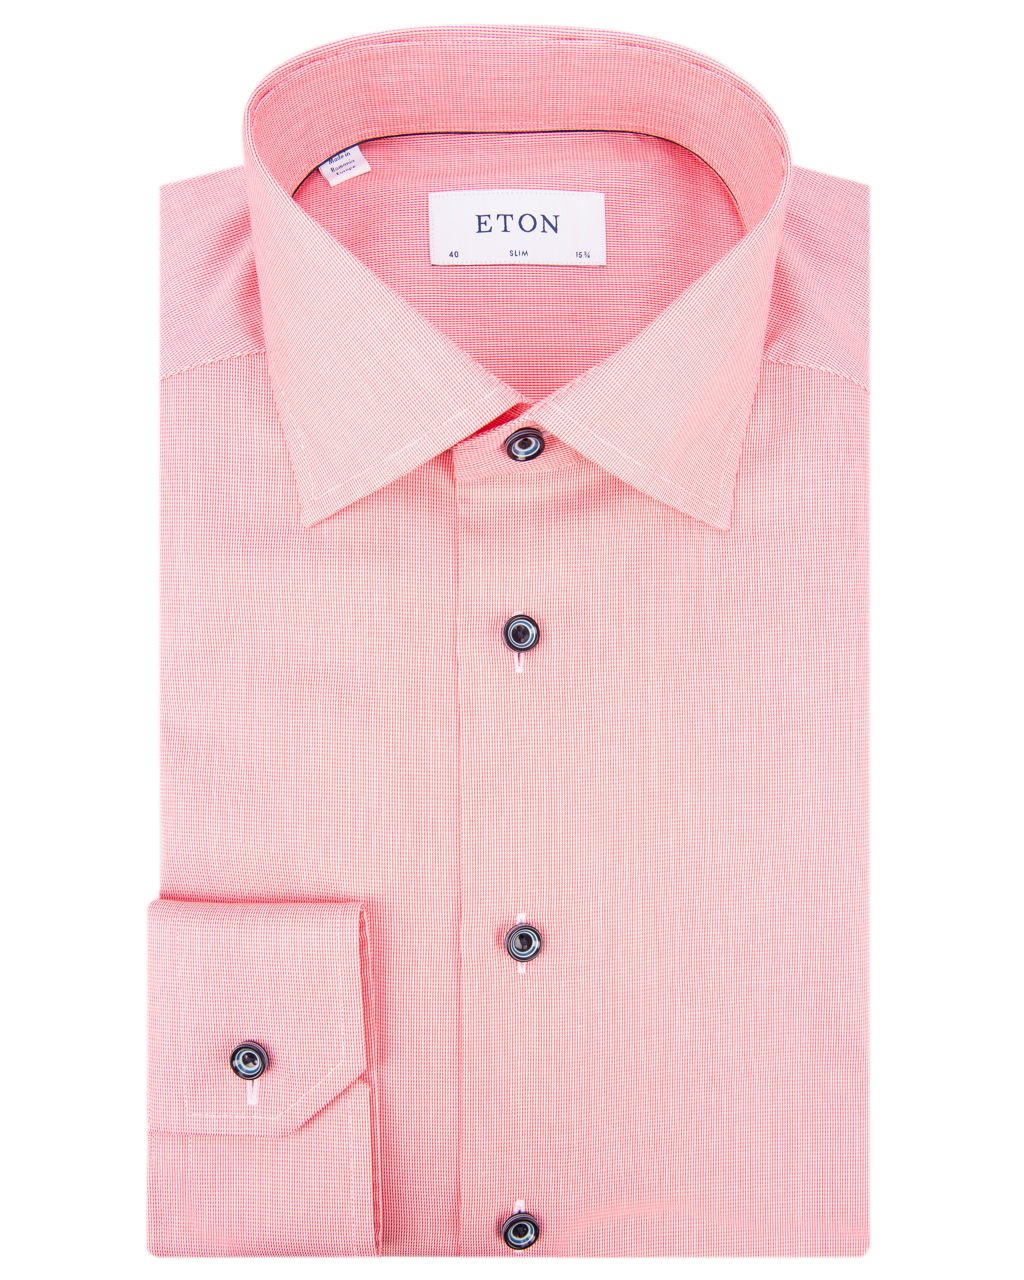 ETON Overhemd LM Roze dessin 059385-001-38